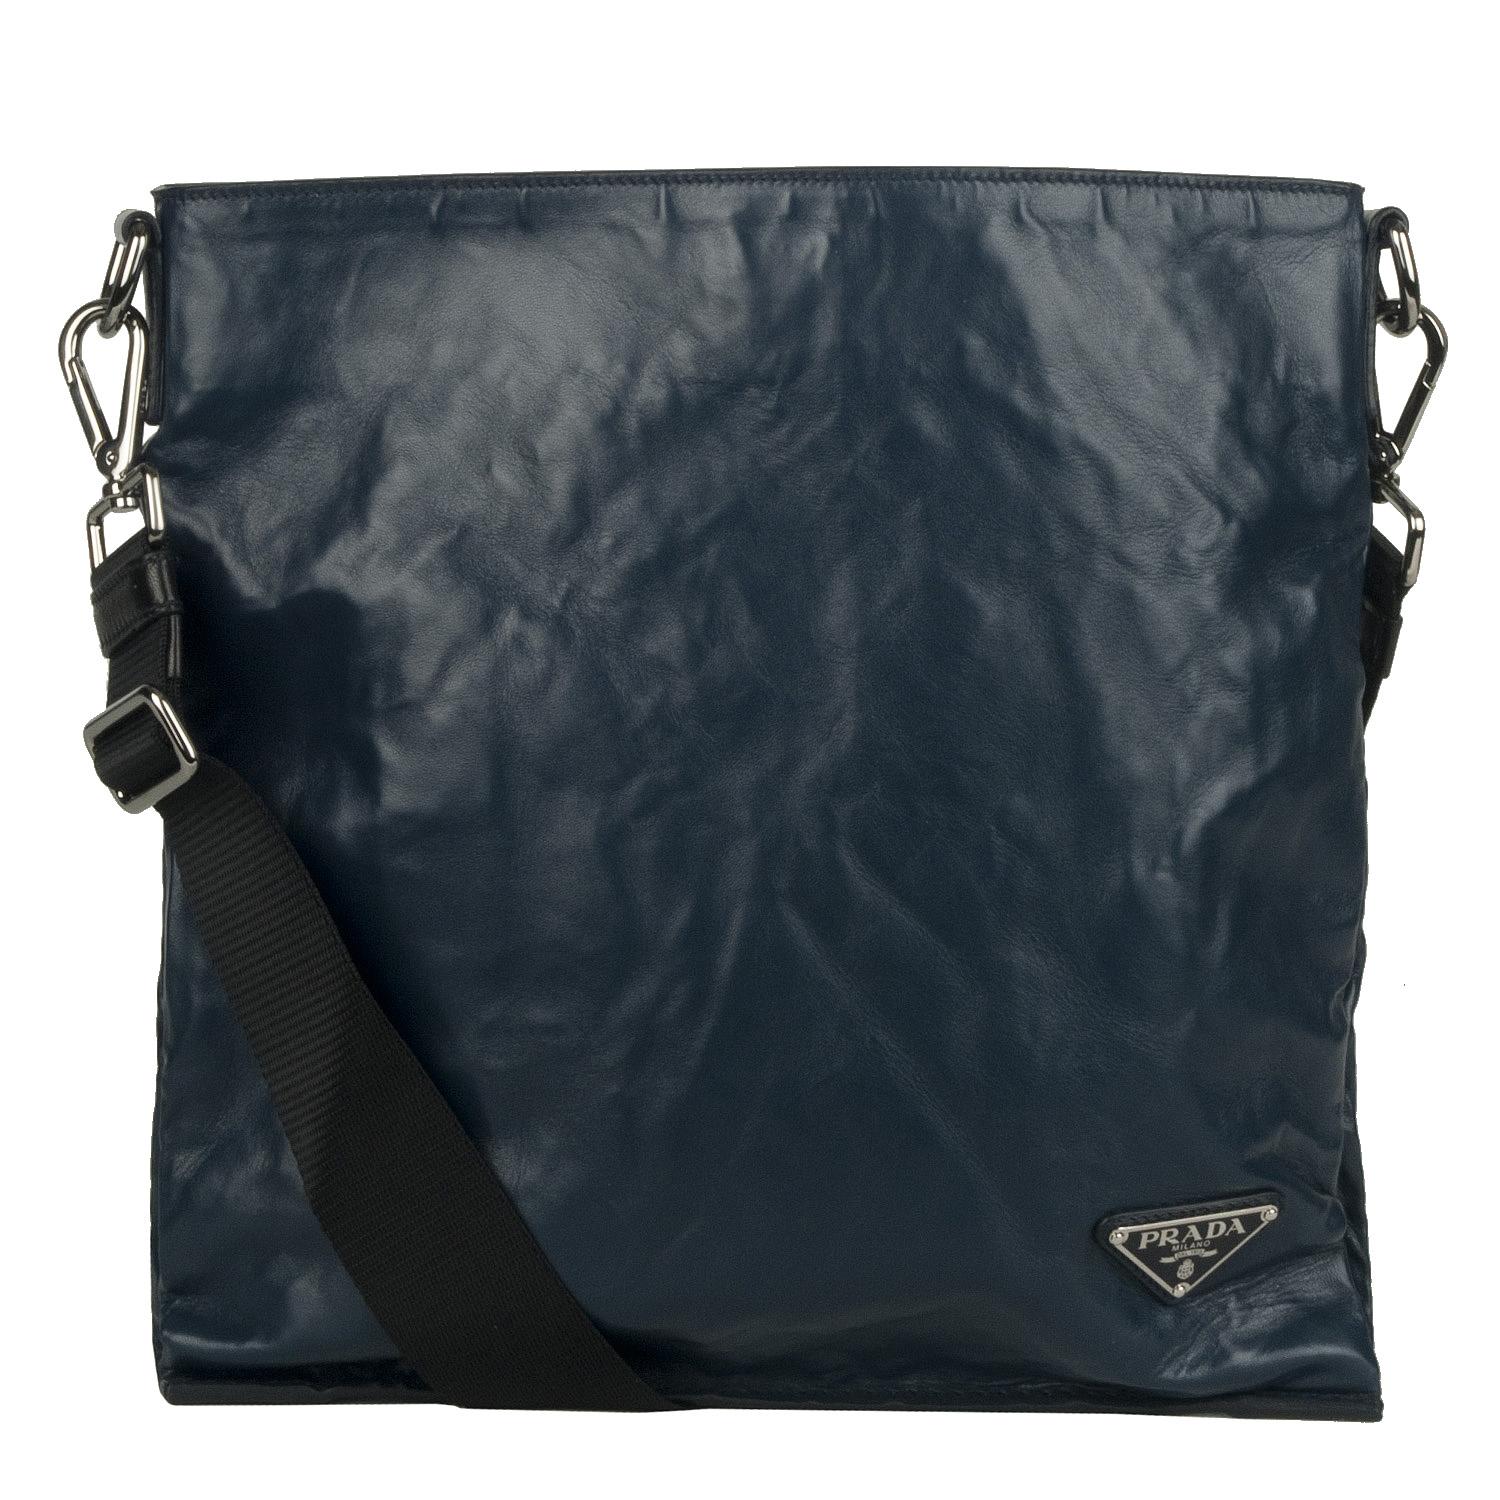 Prada VA0922 Navy Leather Cross-body Bag